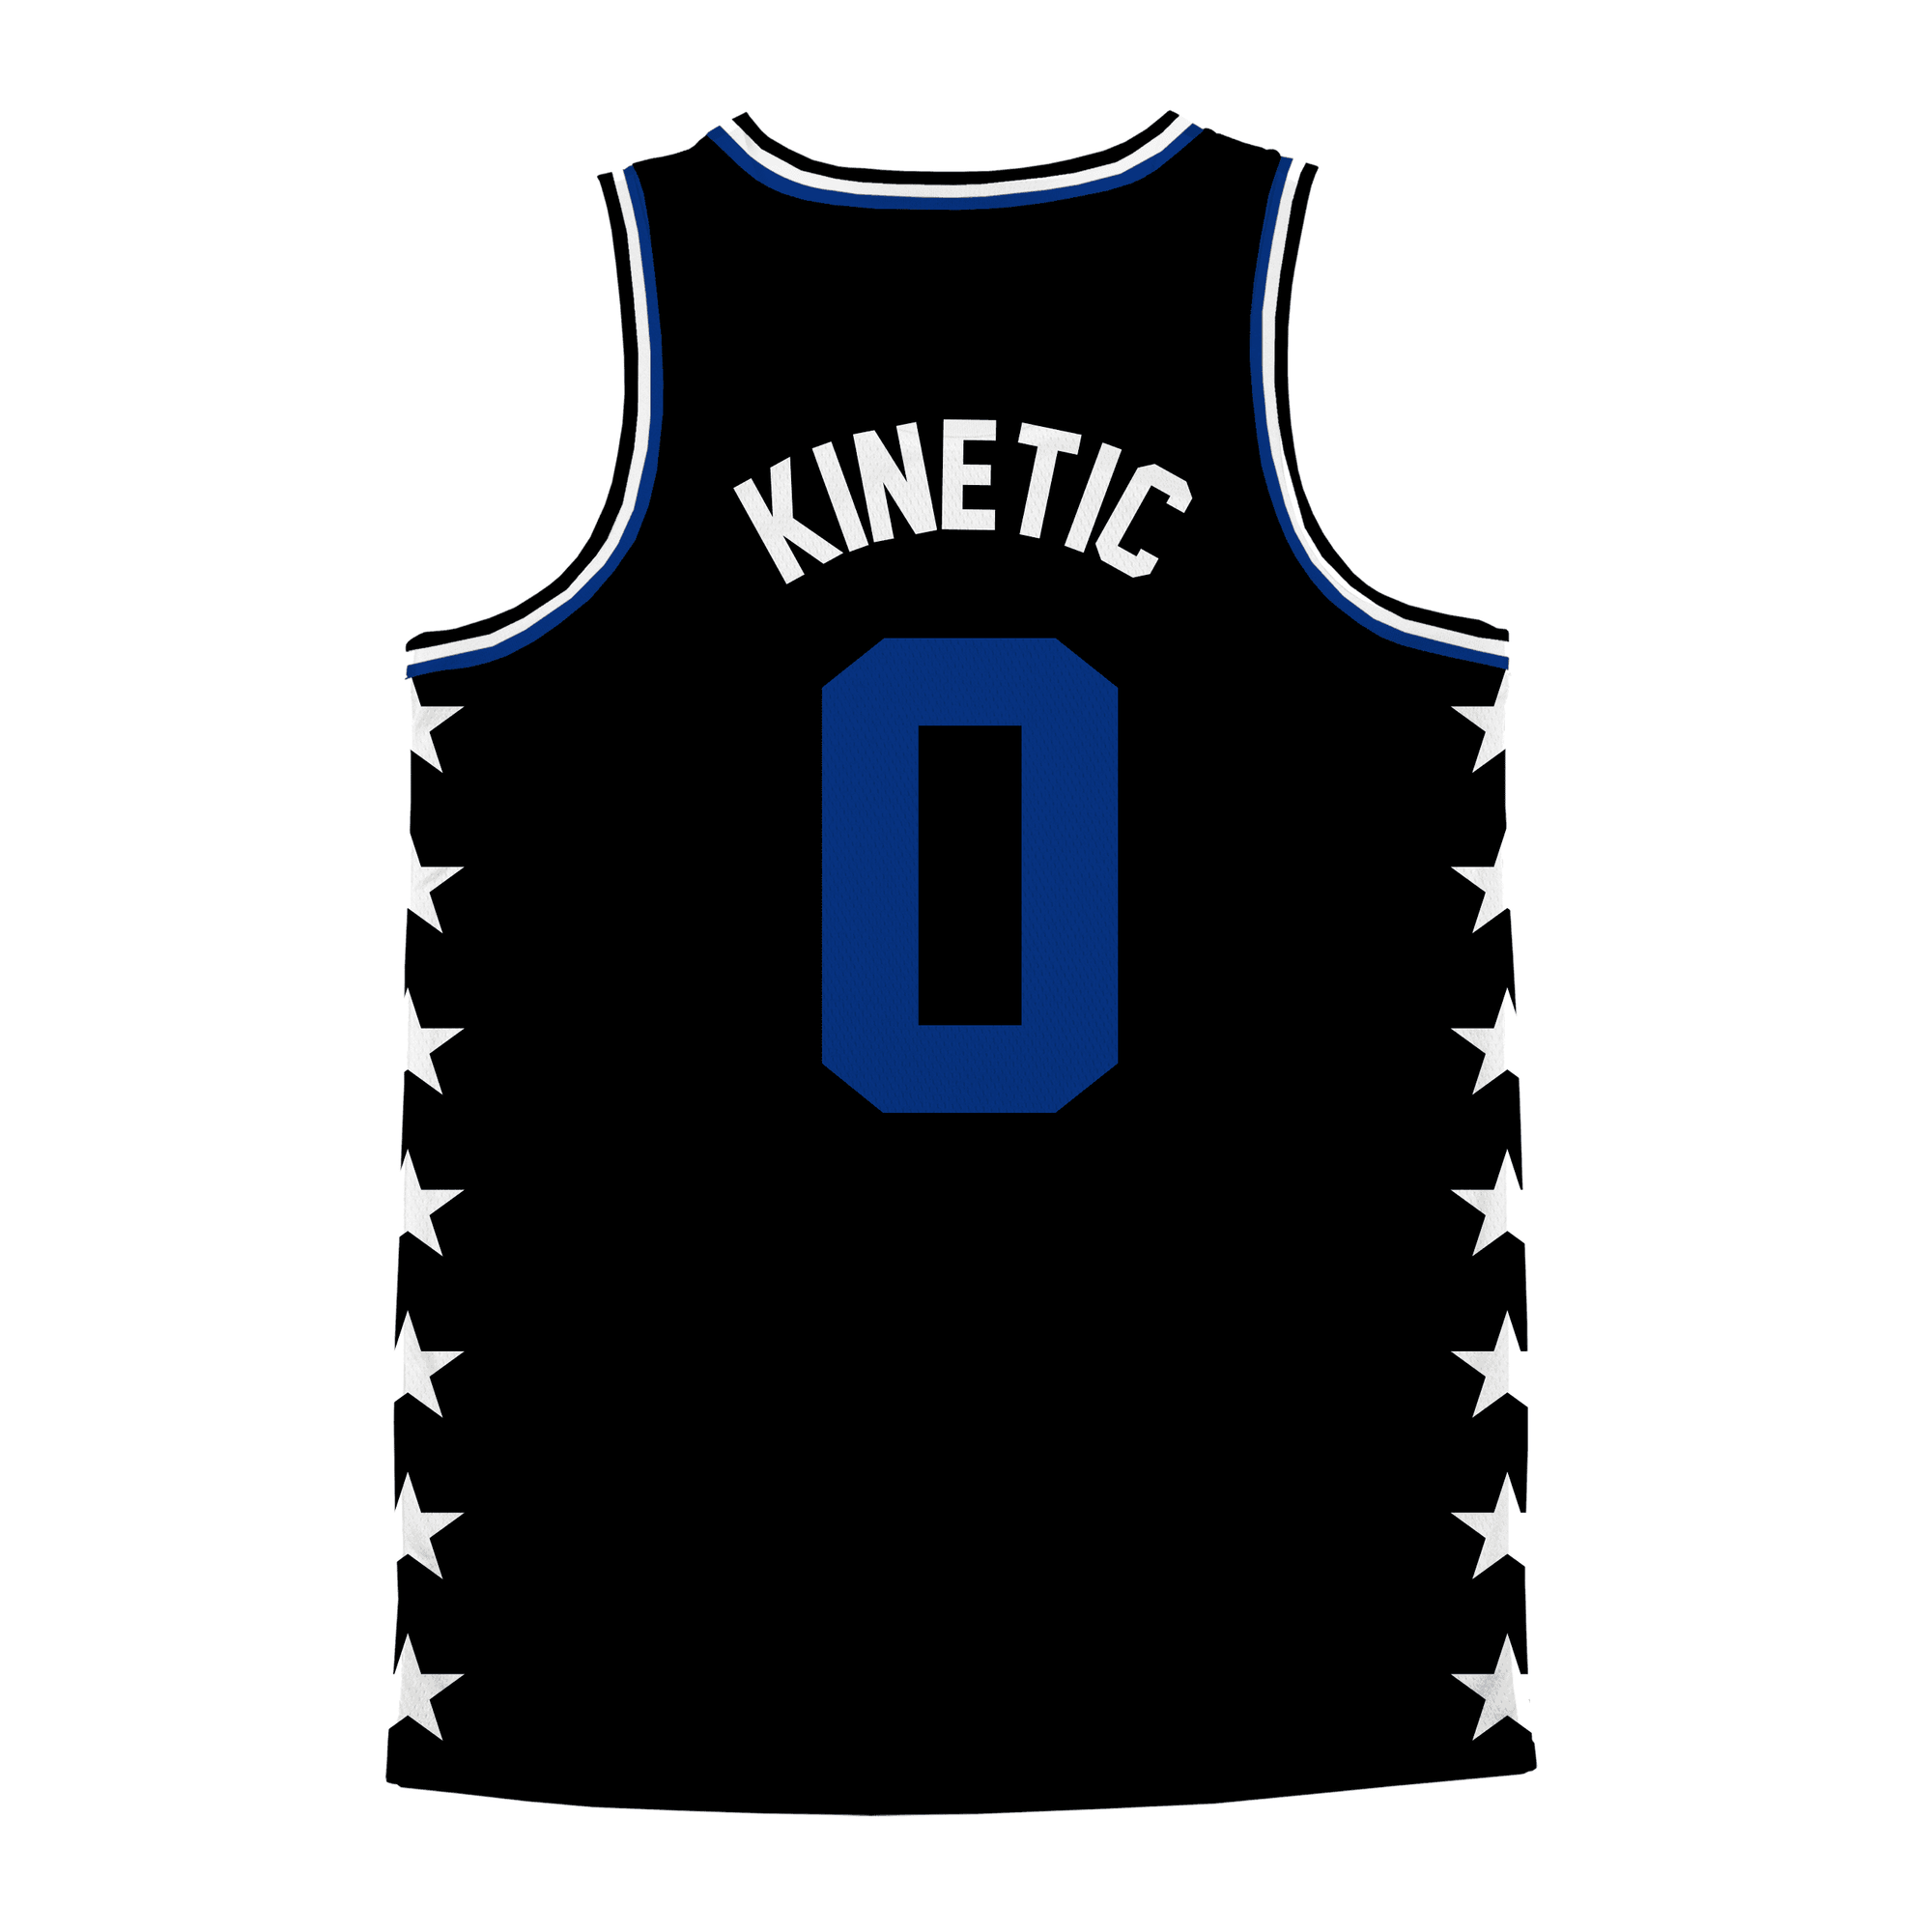 Phi Kappa Sigma - Black Star Night Mode Basketball Jersey